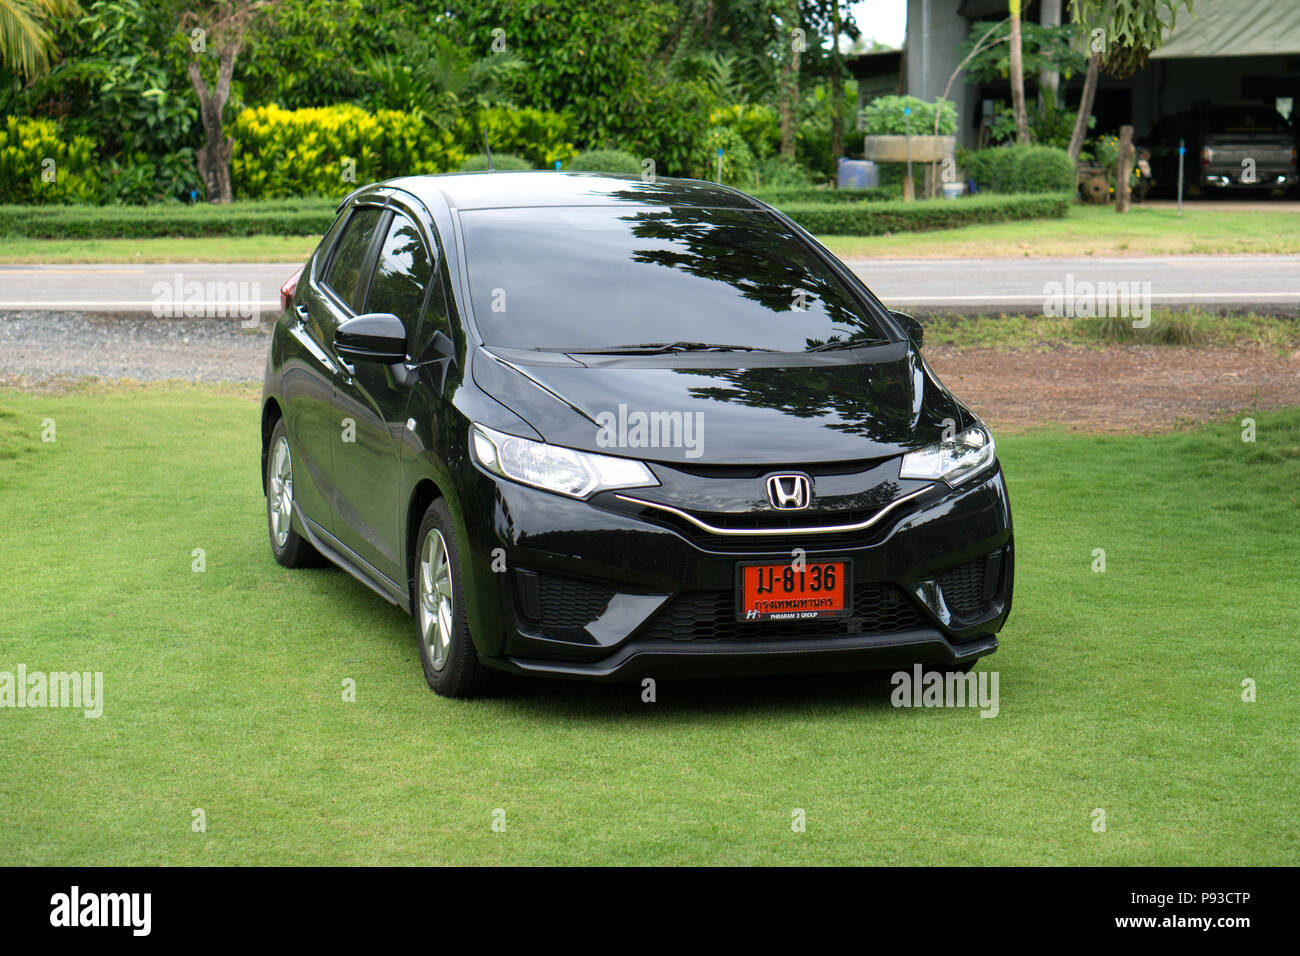 TRAT, THAILAND  DECEMBER 5 2015: Private car, Honda Jazz.or Honda fit Photo at Trat, thailand. Stock Photo